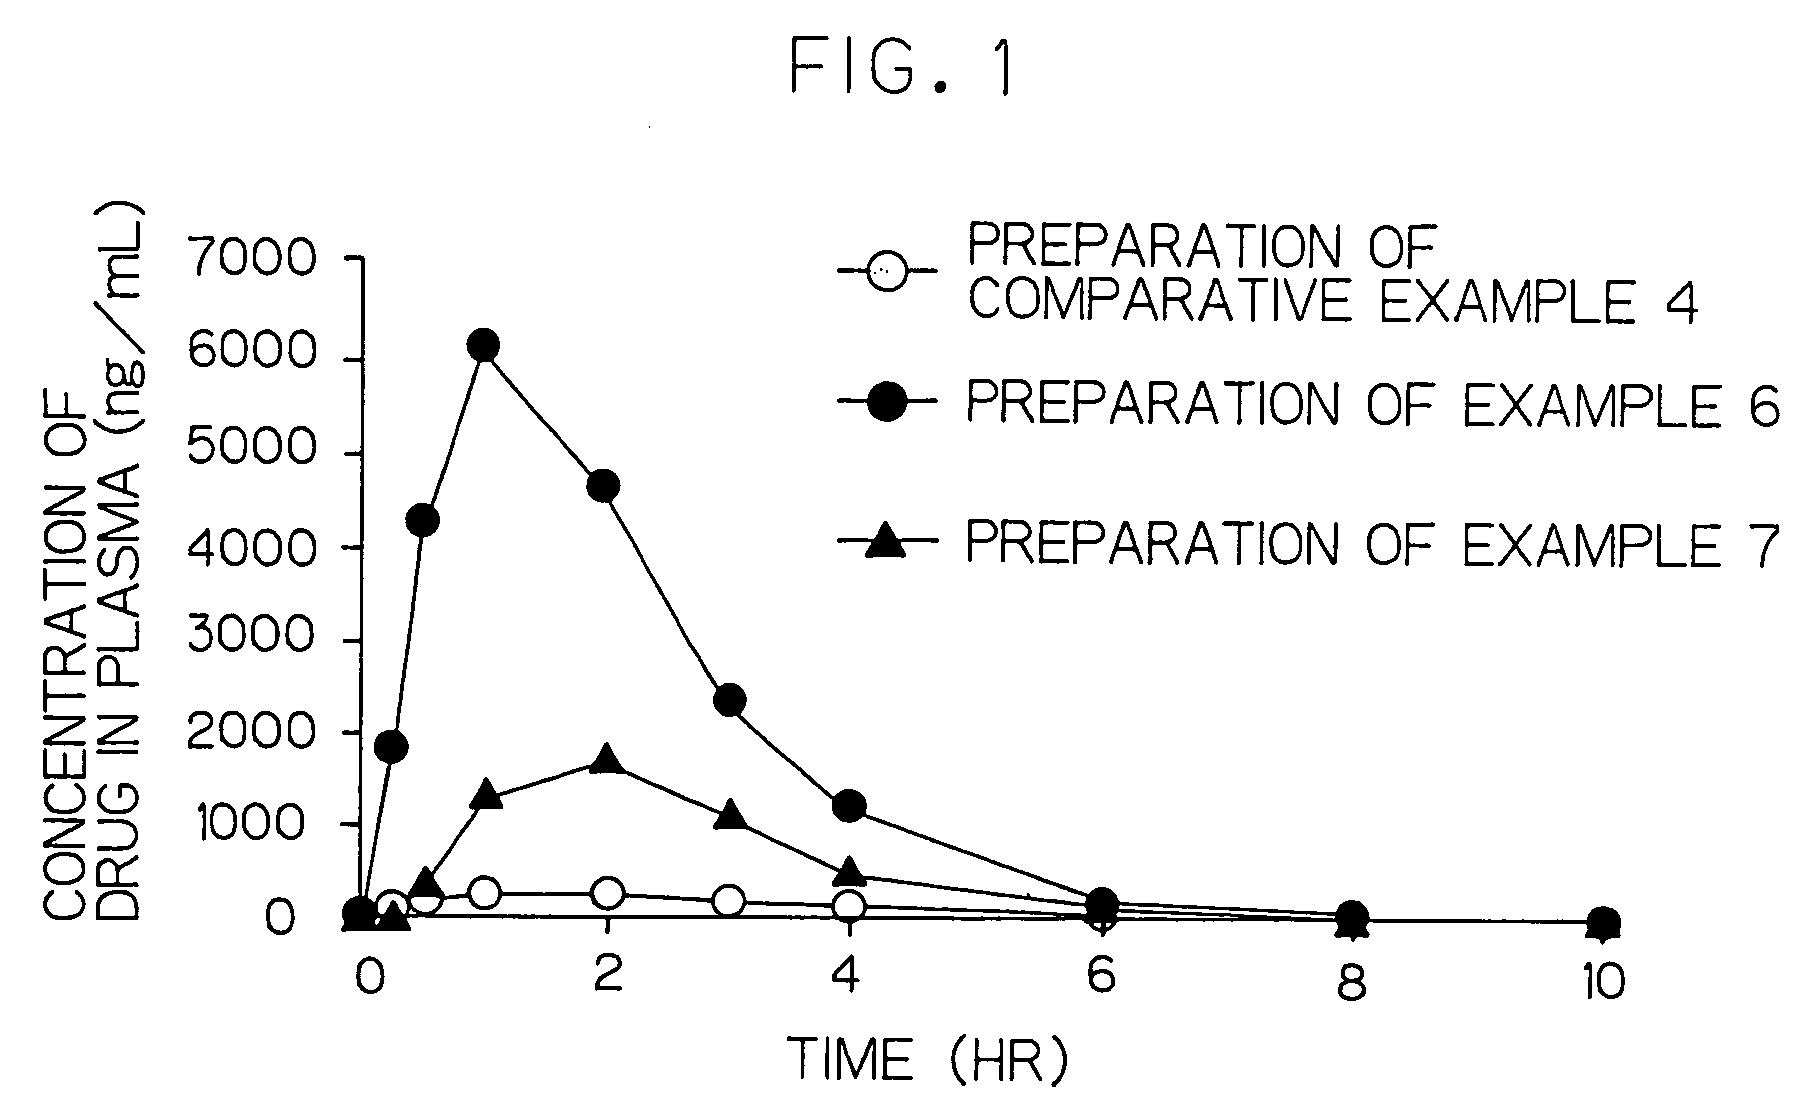 Cilostazol preparation